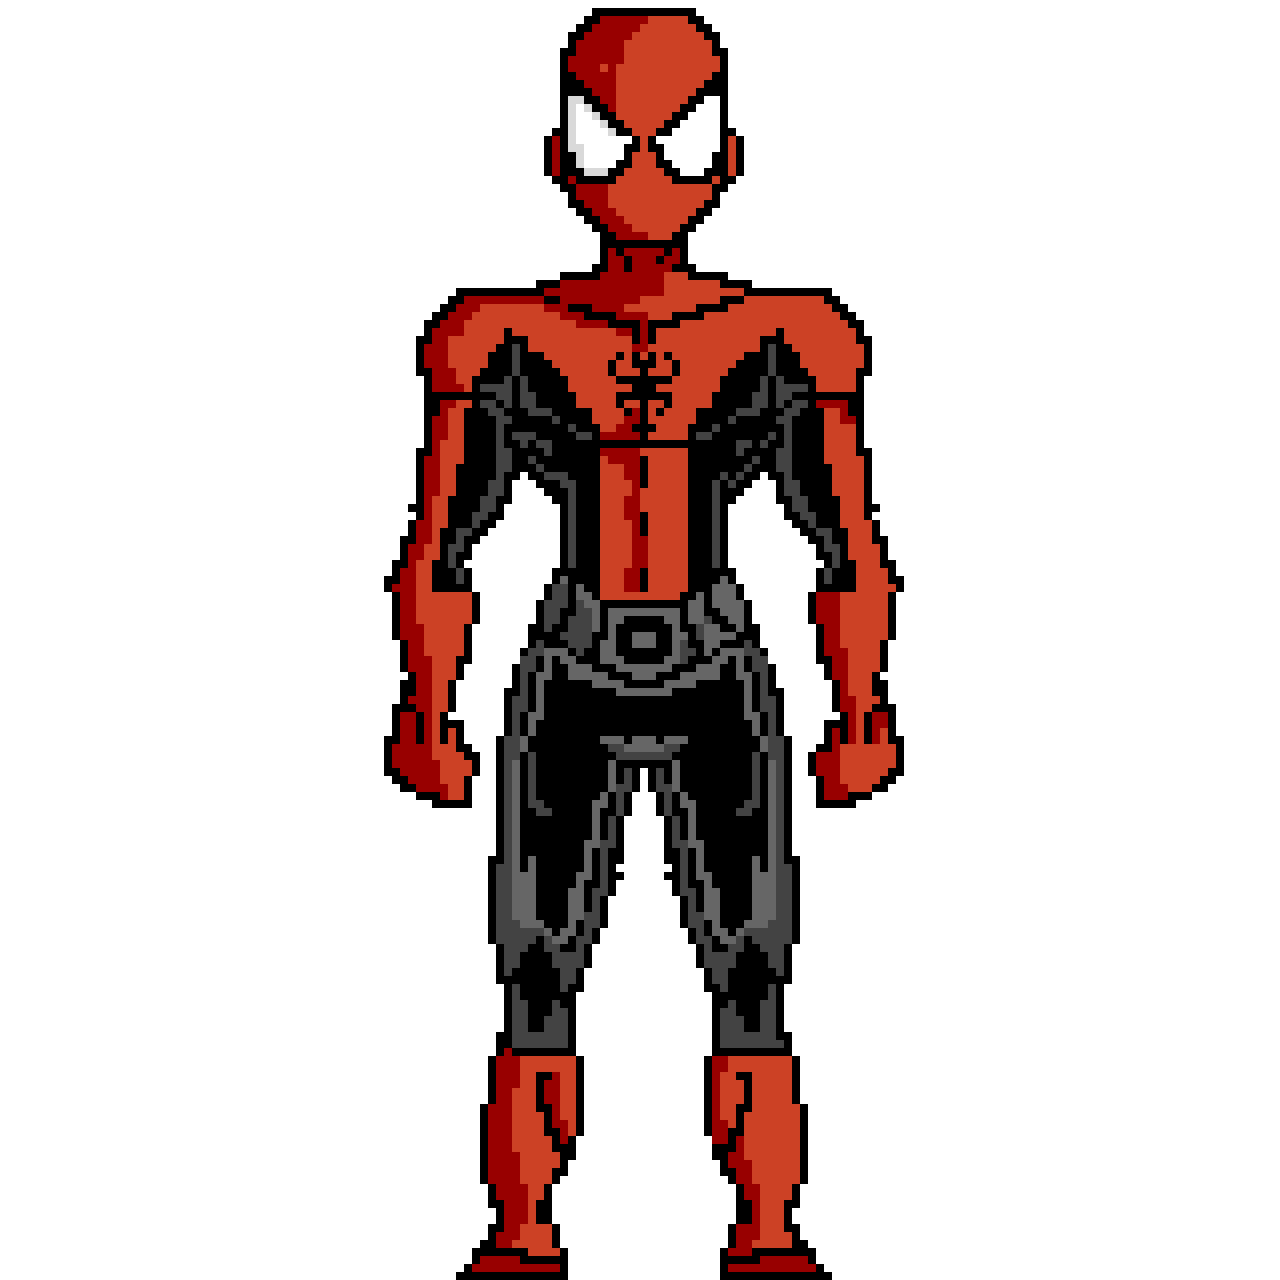 justin’s spider man suit